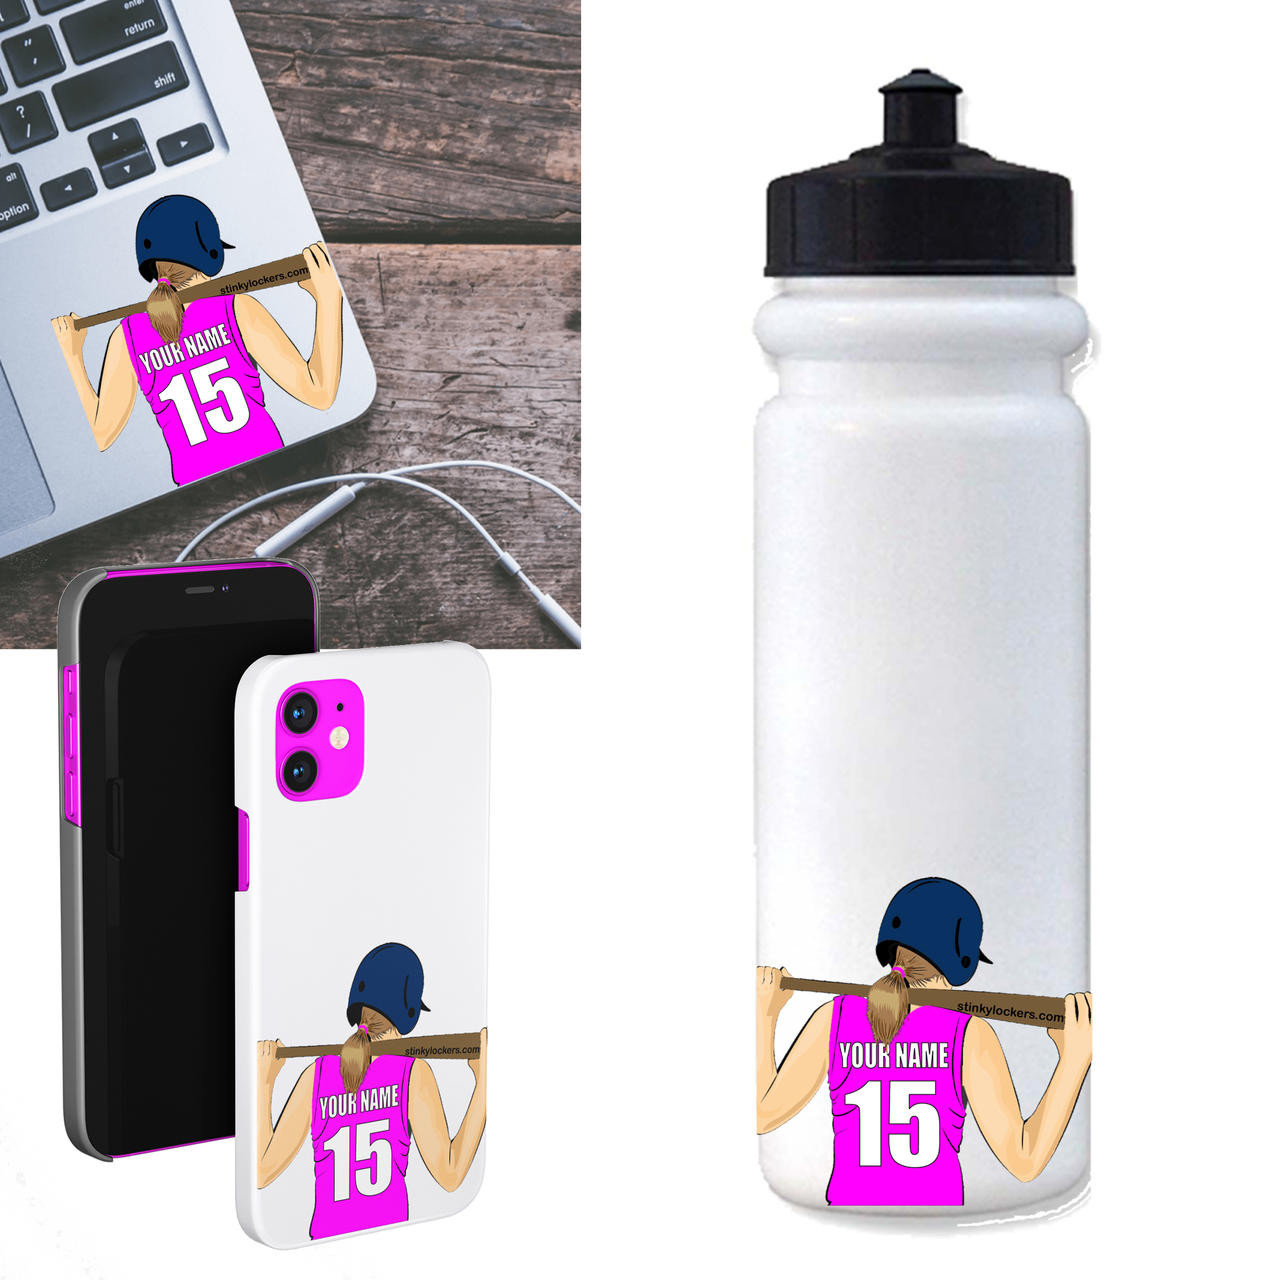 Stinky Lockers Personalized Softball Stickers - 6 Pack